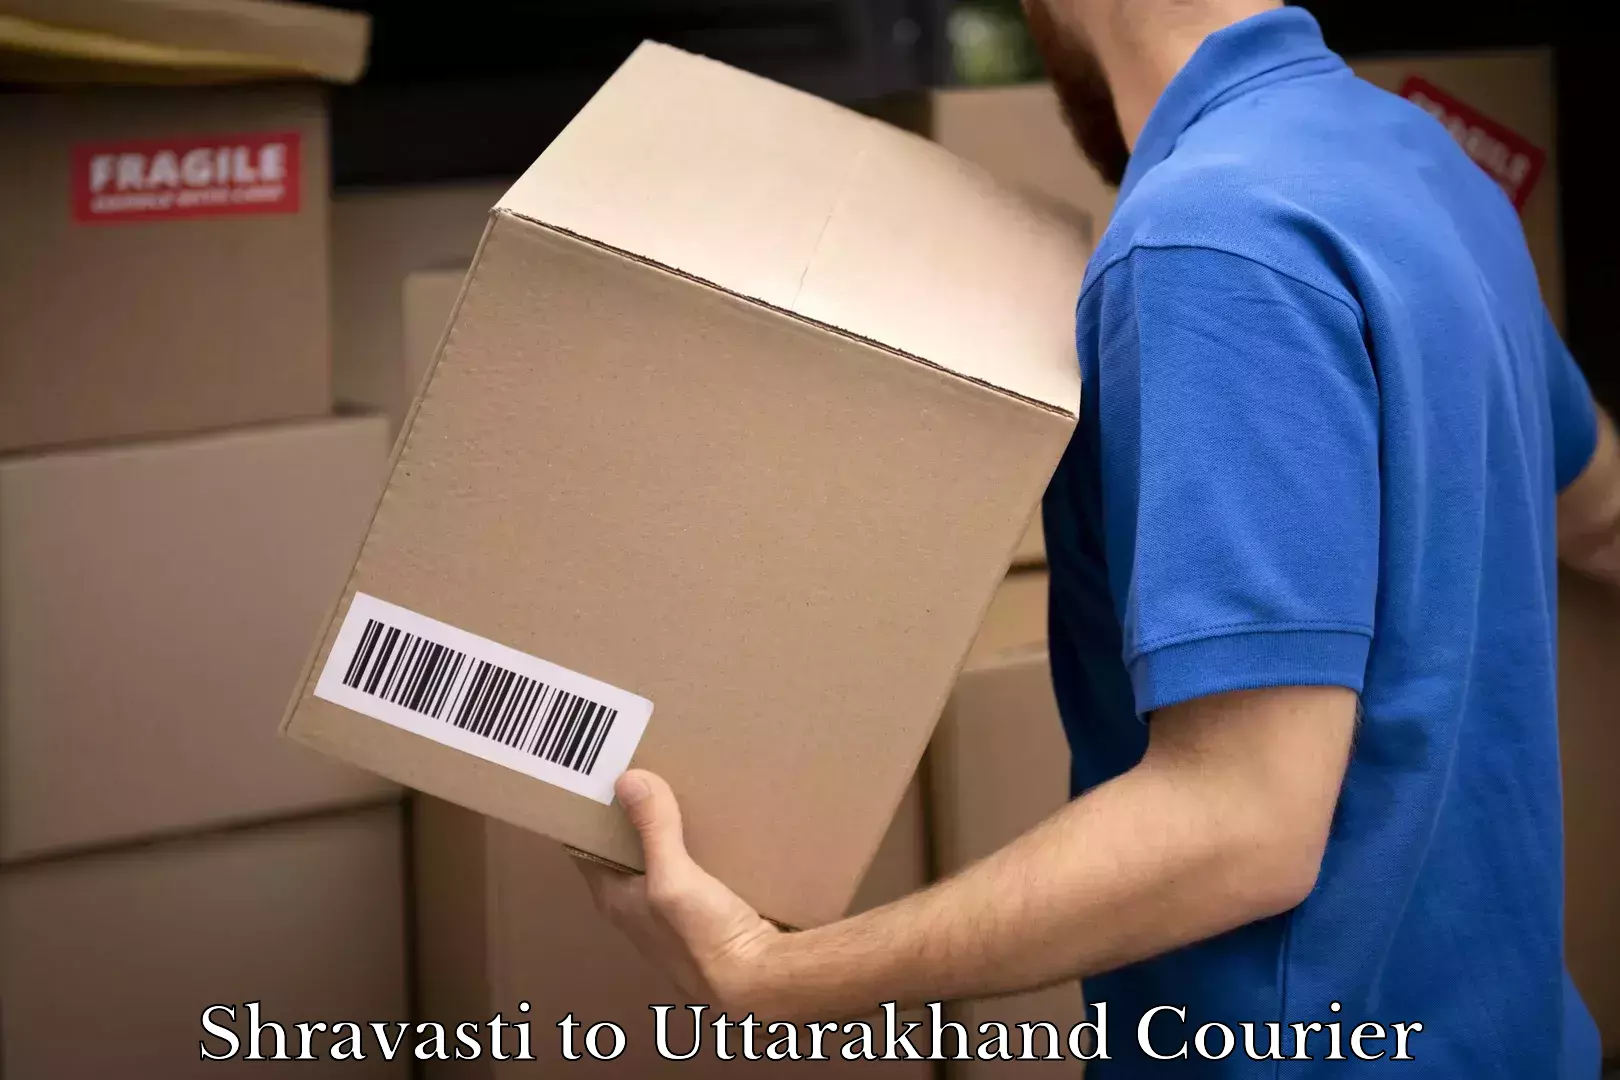 Affordable parcel service Shravasti to Uttarakhand